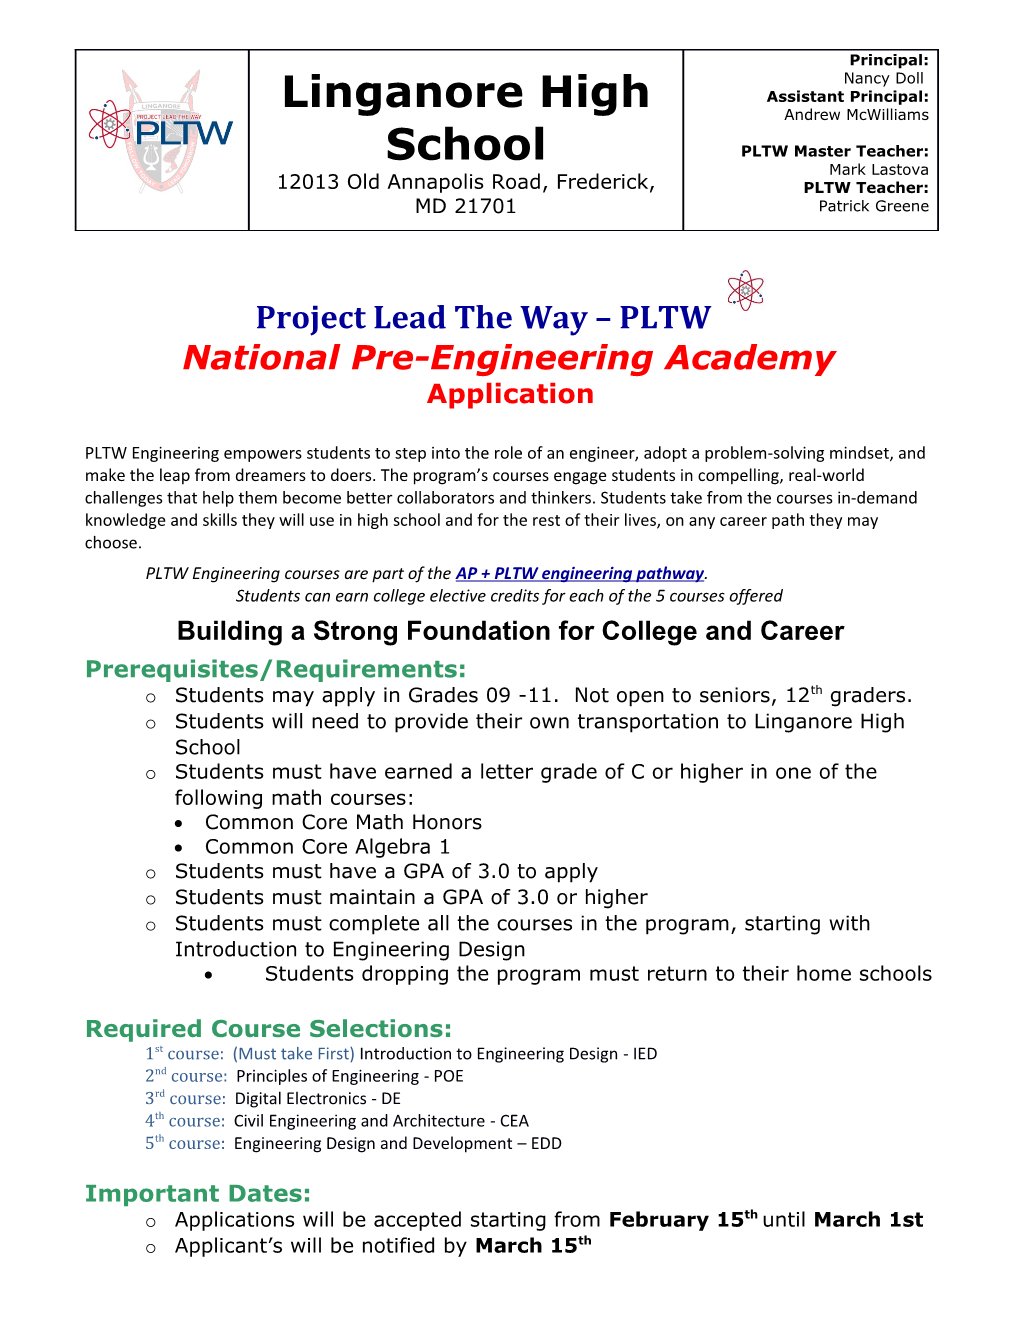 National Pre-Engineering Academy